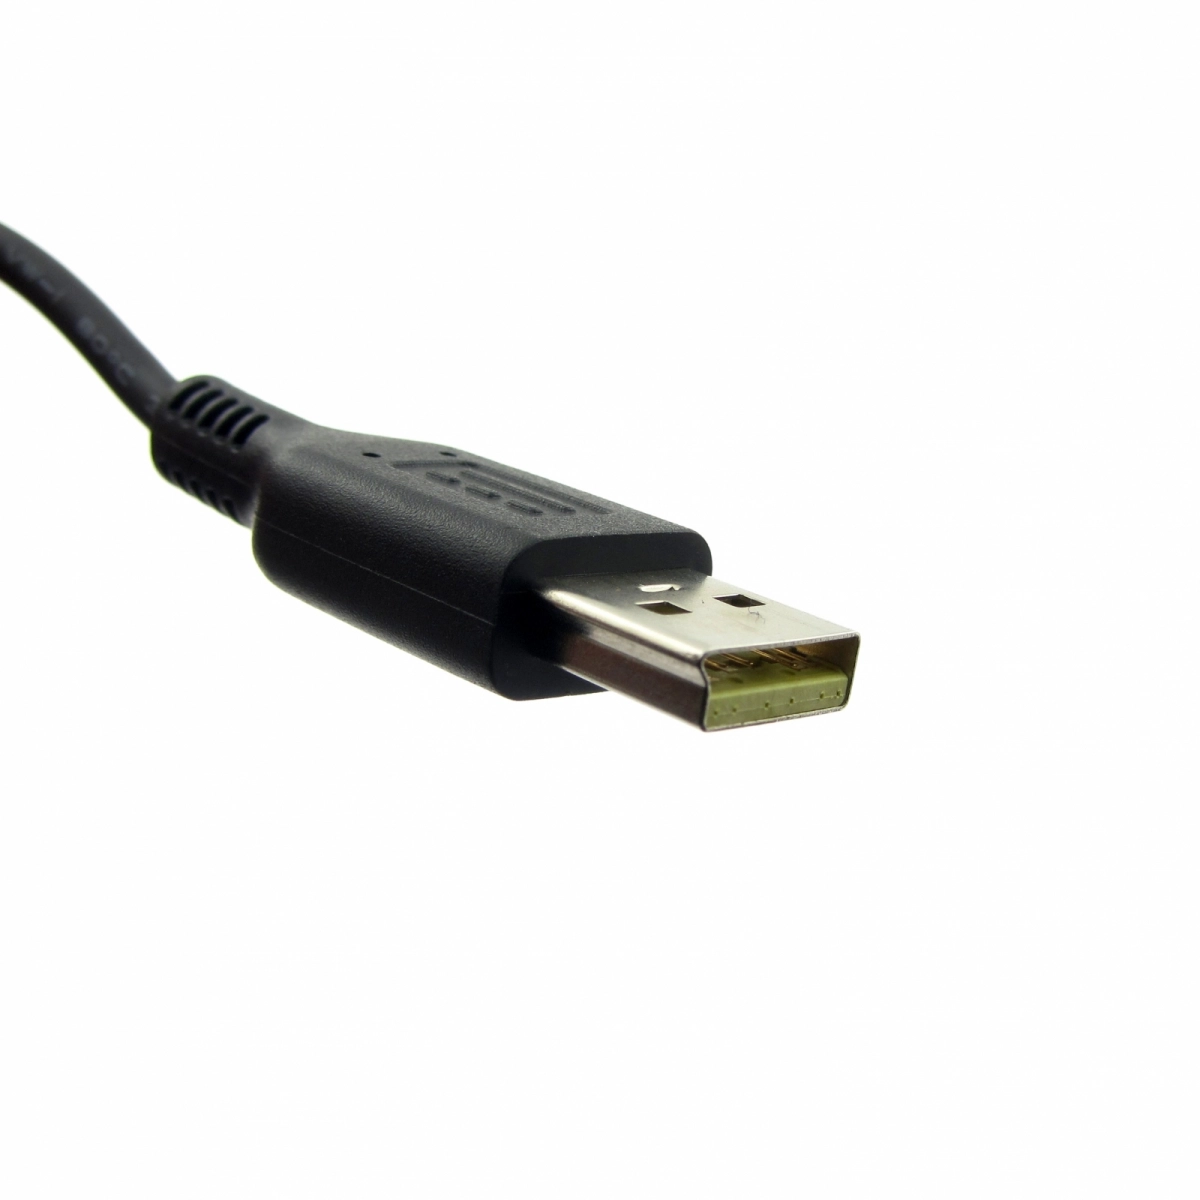 MTXtec Netzteil für LENOVO 36200585, 20/5.2V, 2A, Stecker USB